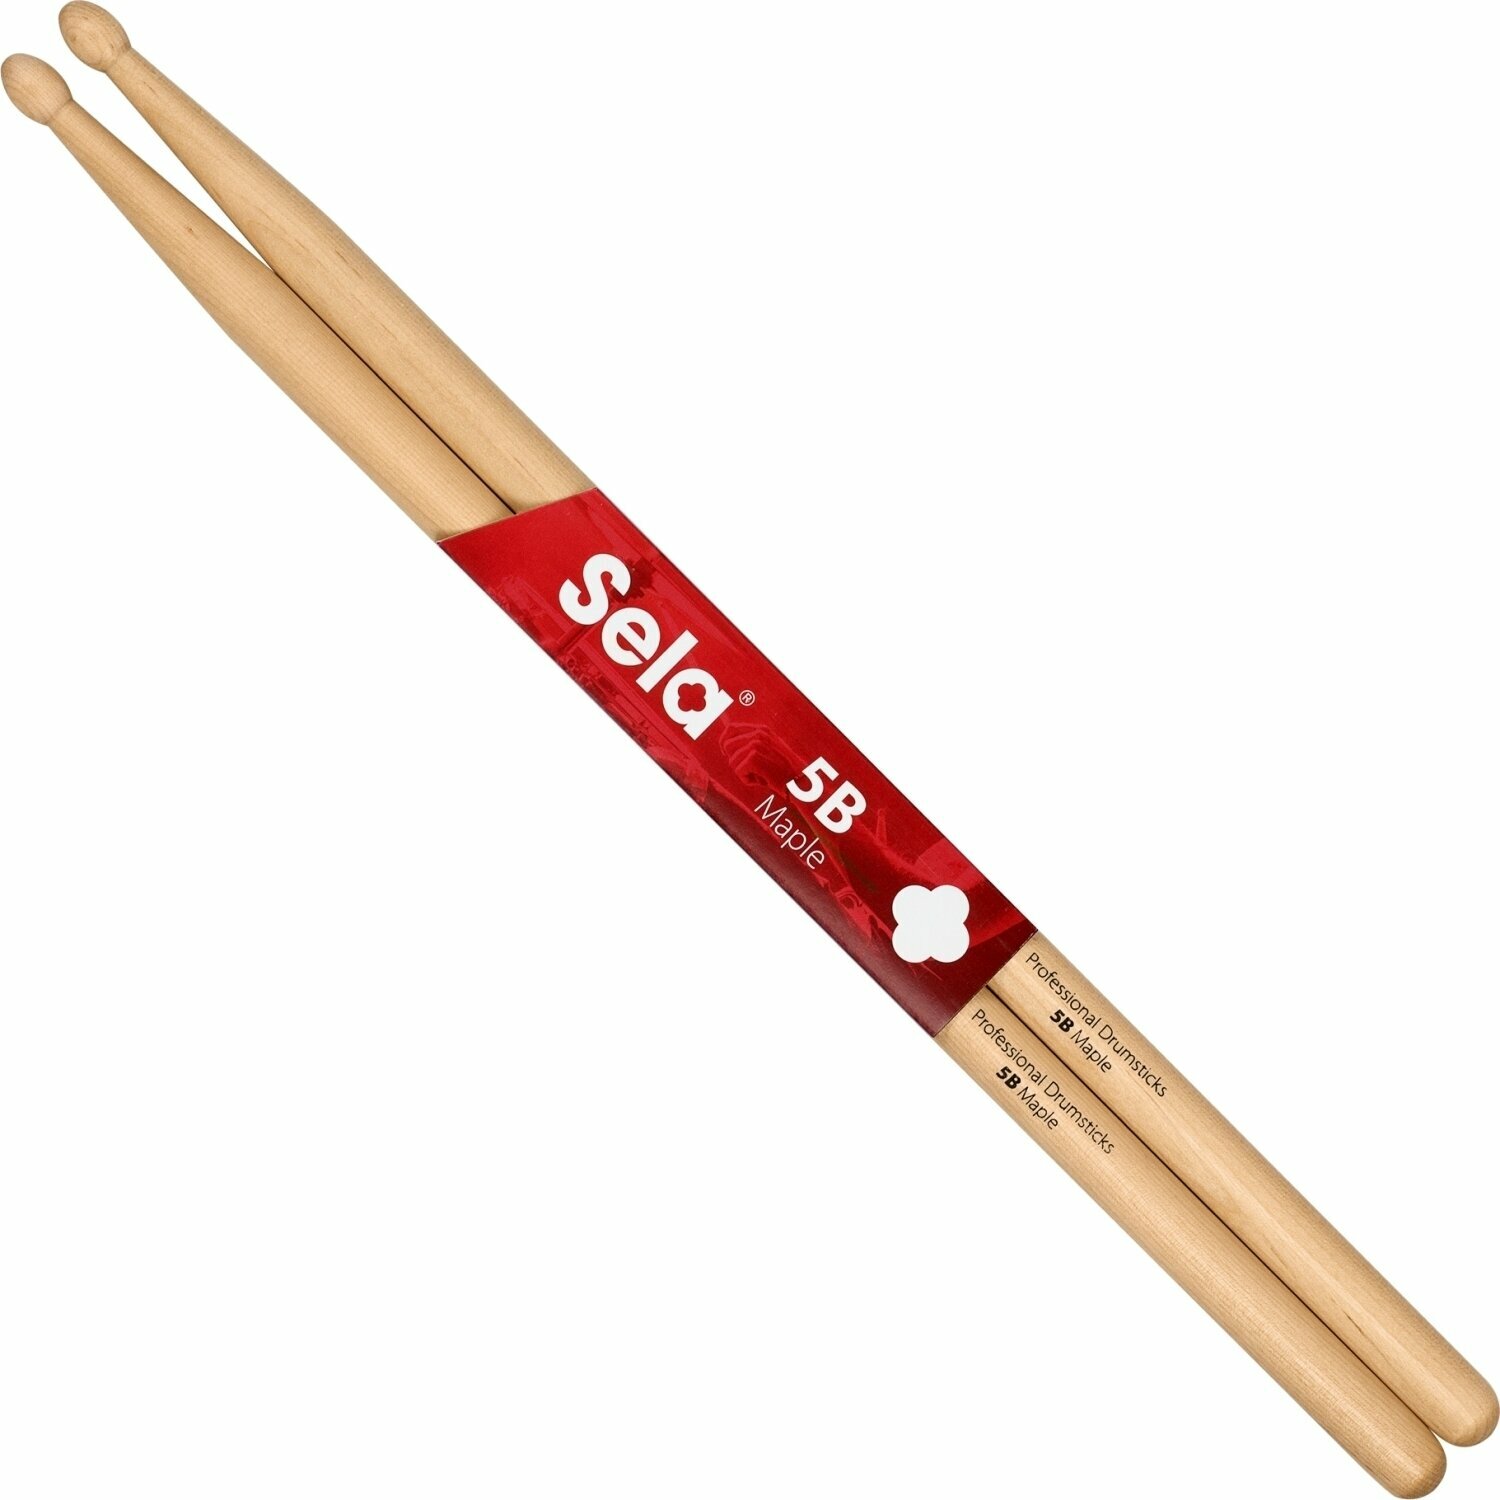 Drumsticks Sela SE 273 Professional Drumsticks 5B - 6 Pair Drumsticks